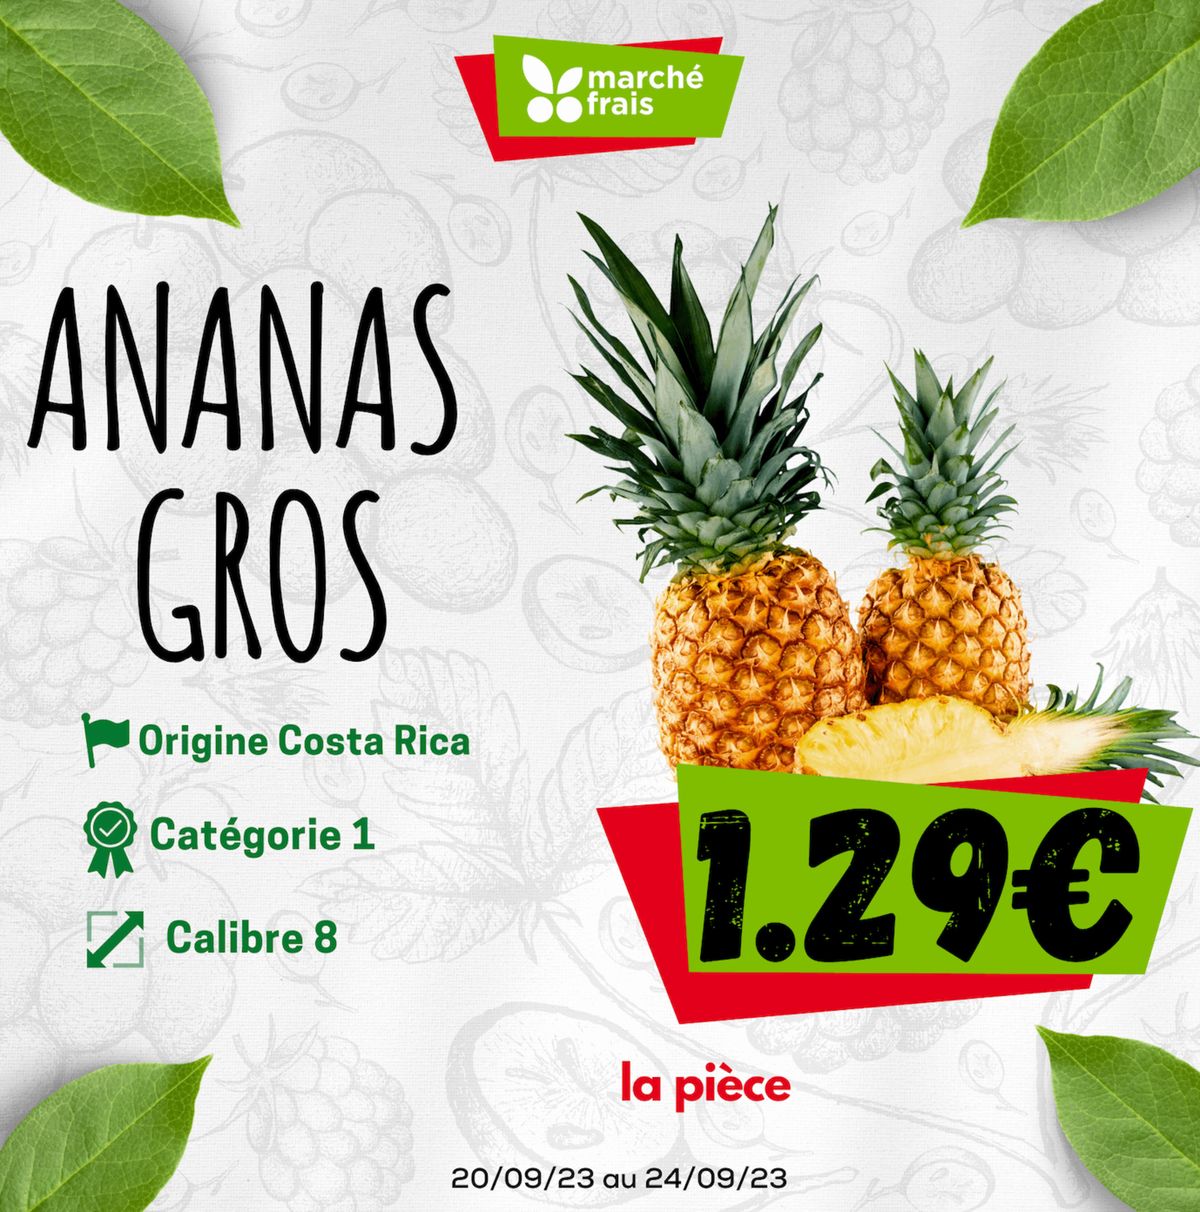 Catalogue Ananas gros, page 00001